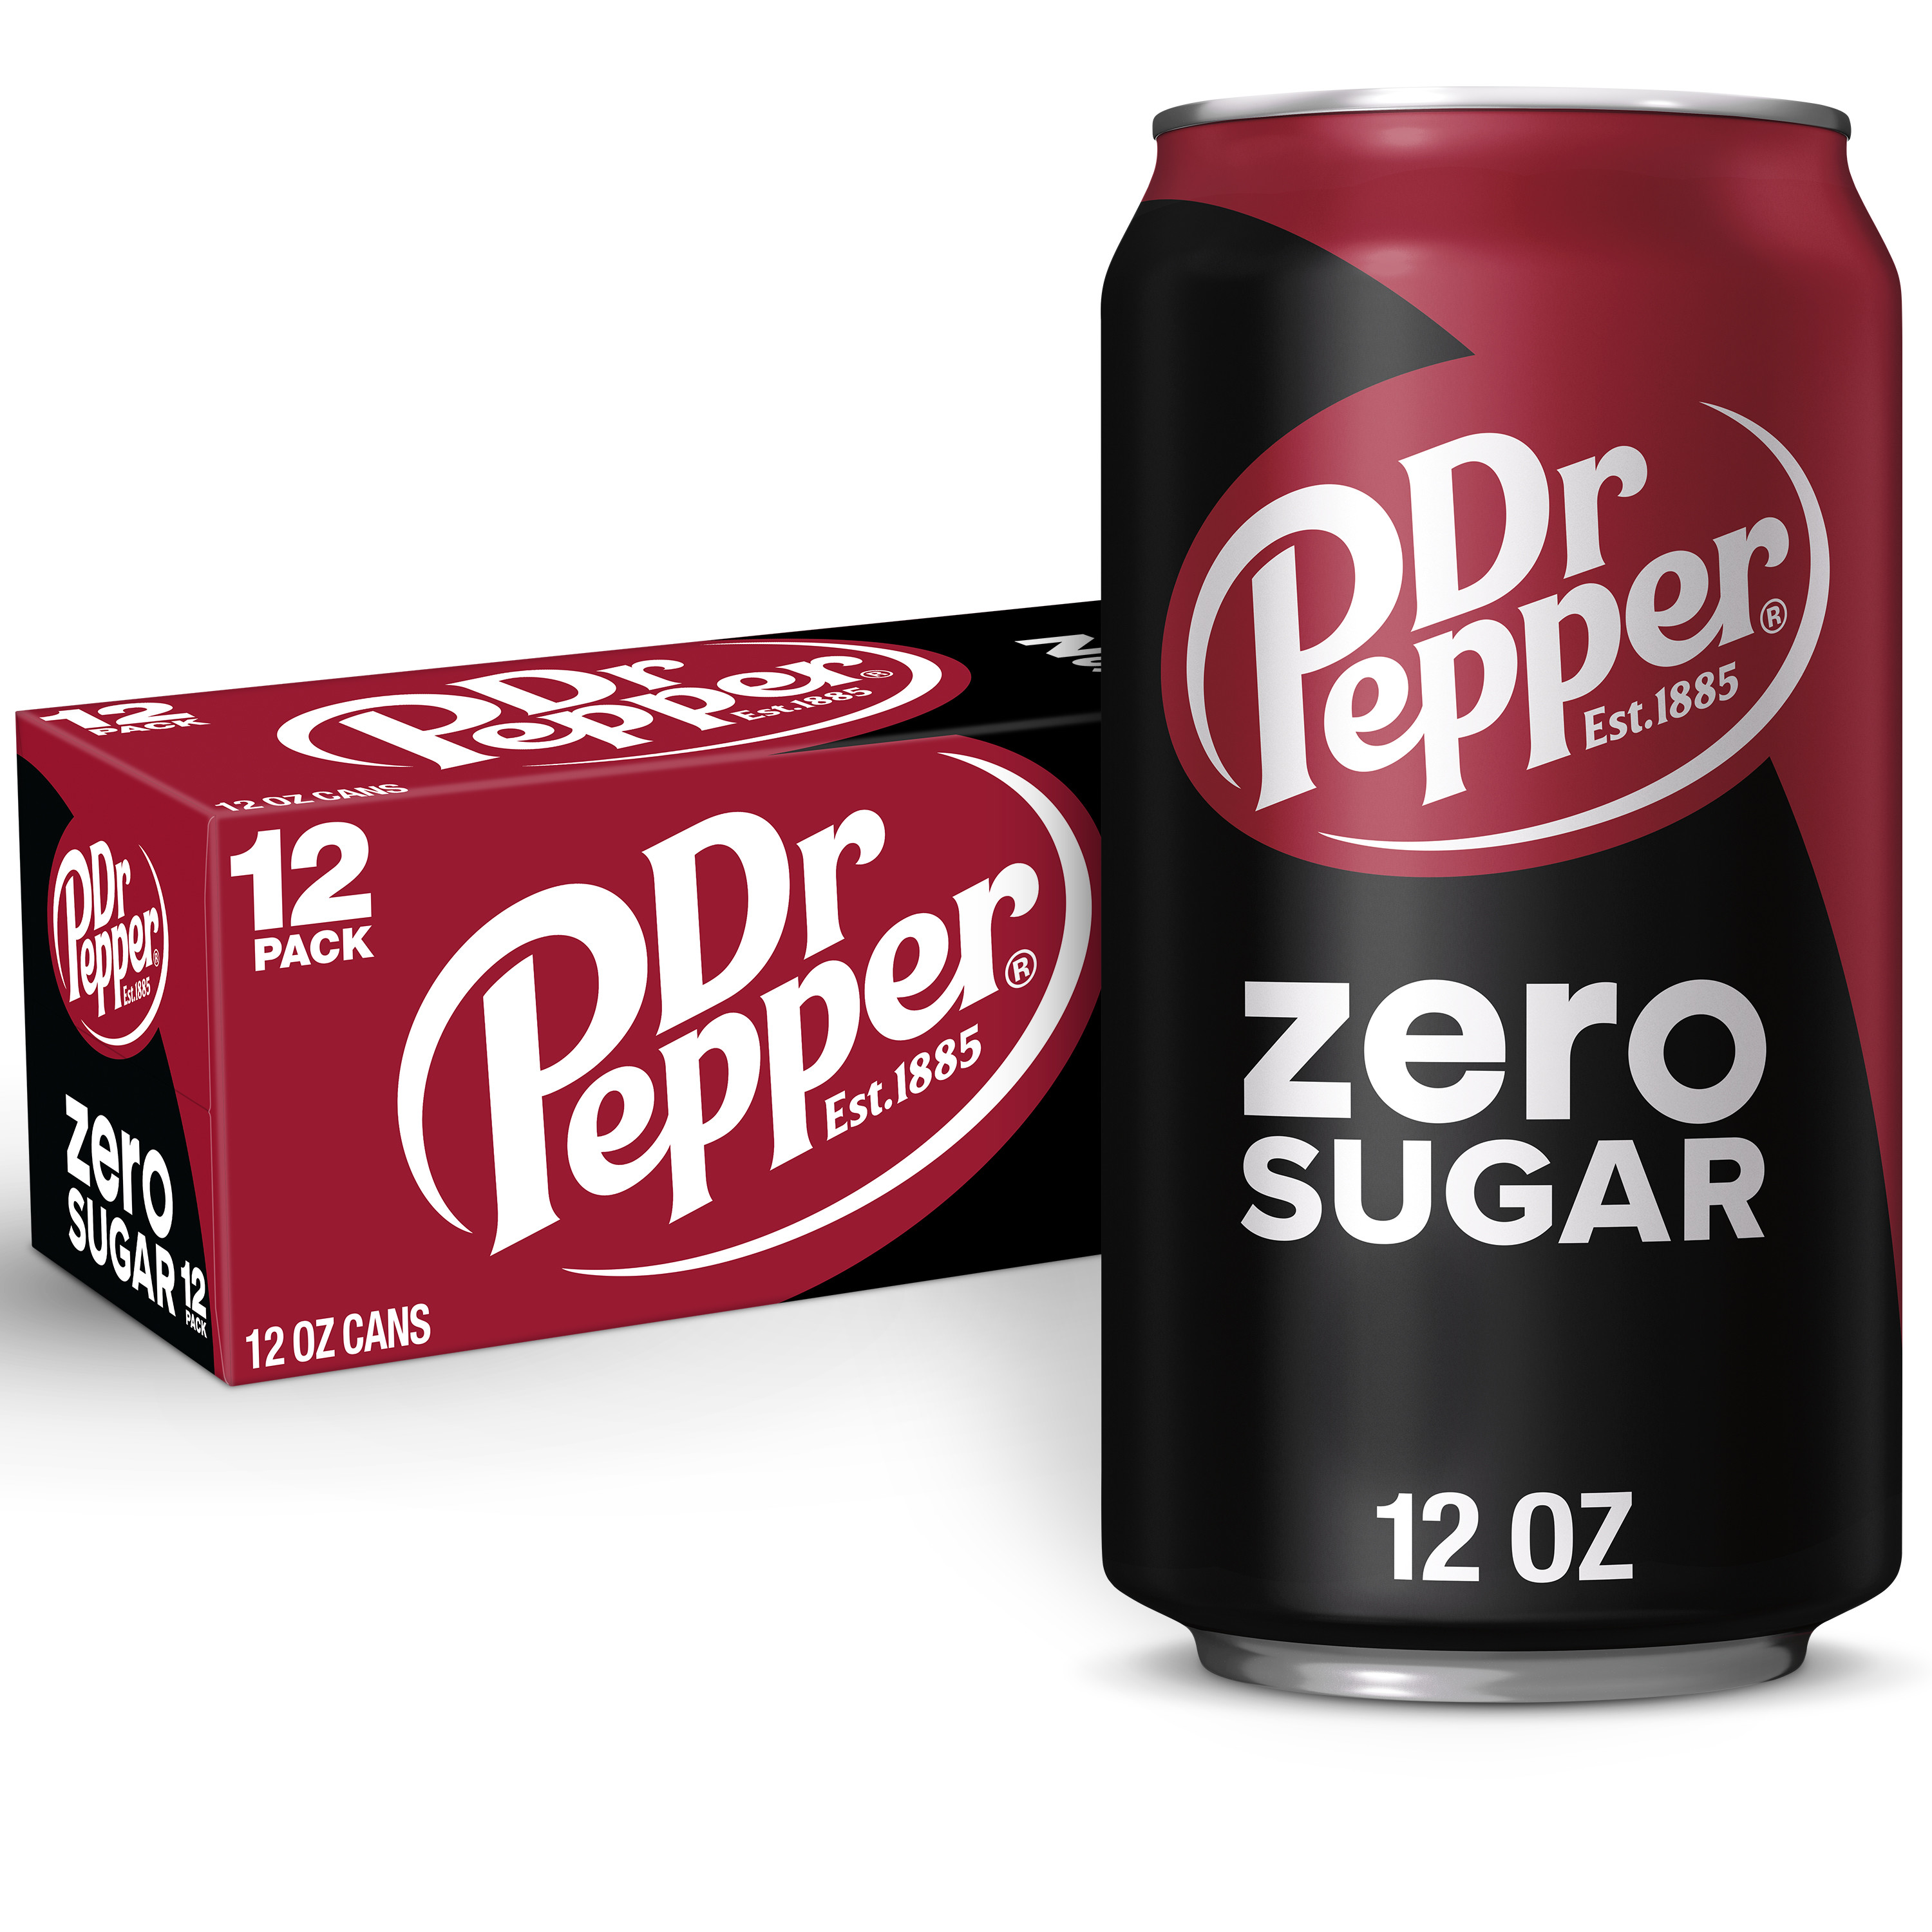 Dr Pepper Zero Sugar Soda Pop, 12 fl oz, 12 Pack Cans - image 1 of 12